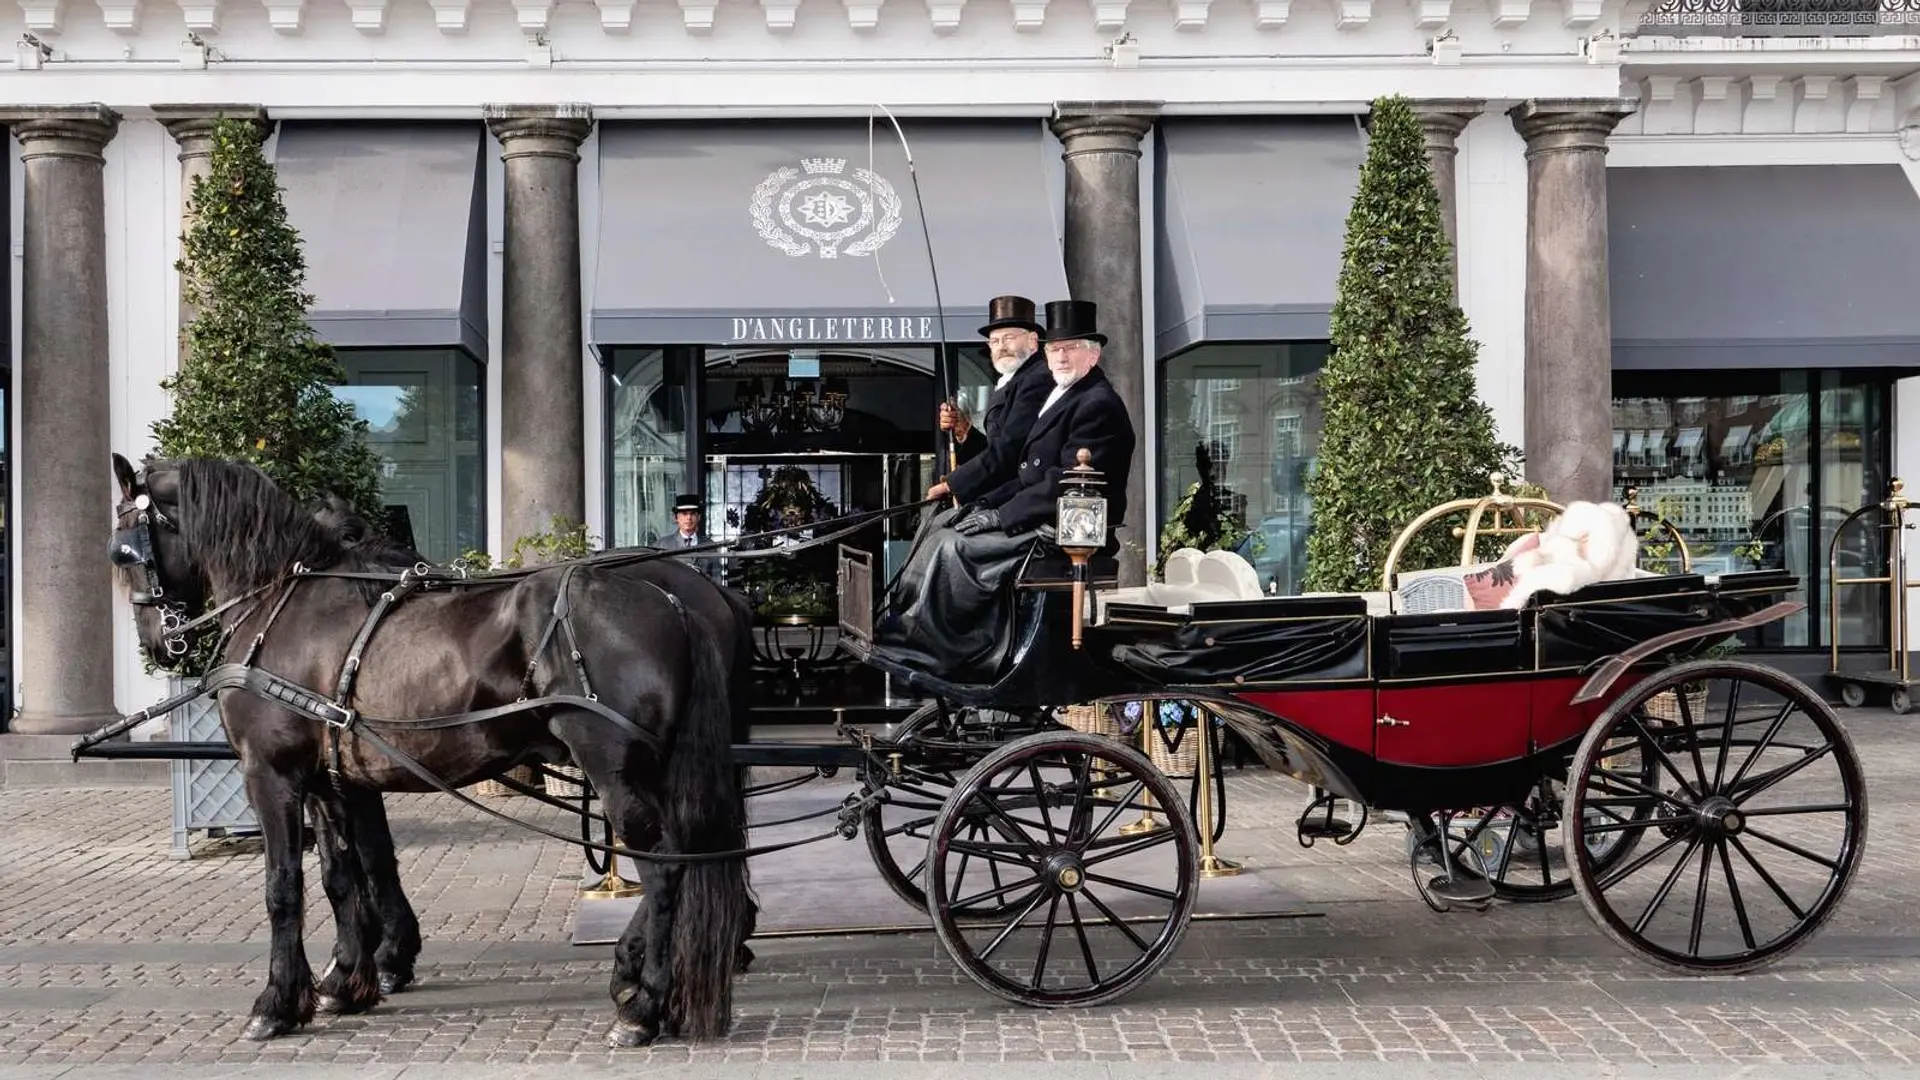 Hotel review Service & Facilities' - Hotel d'Angleterre Copenhagen - 3